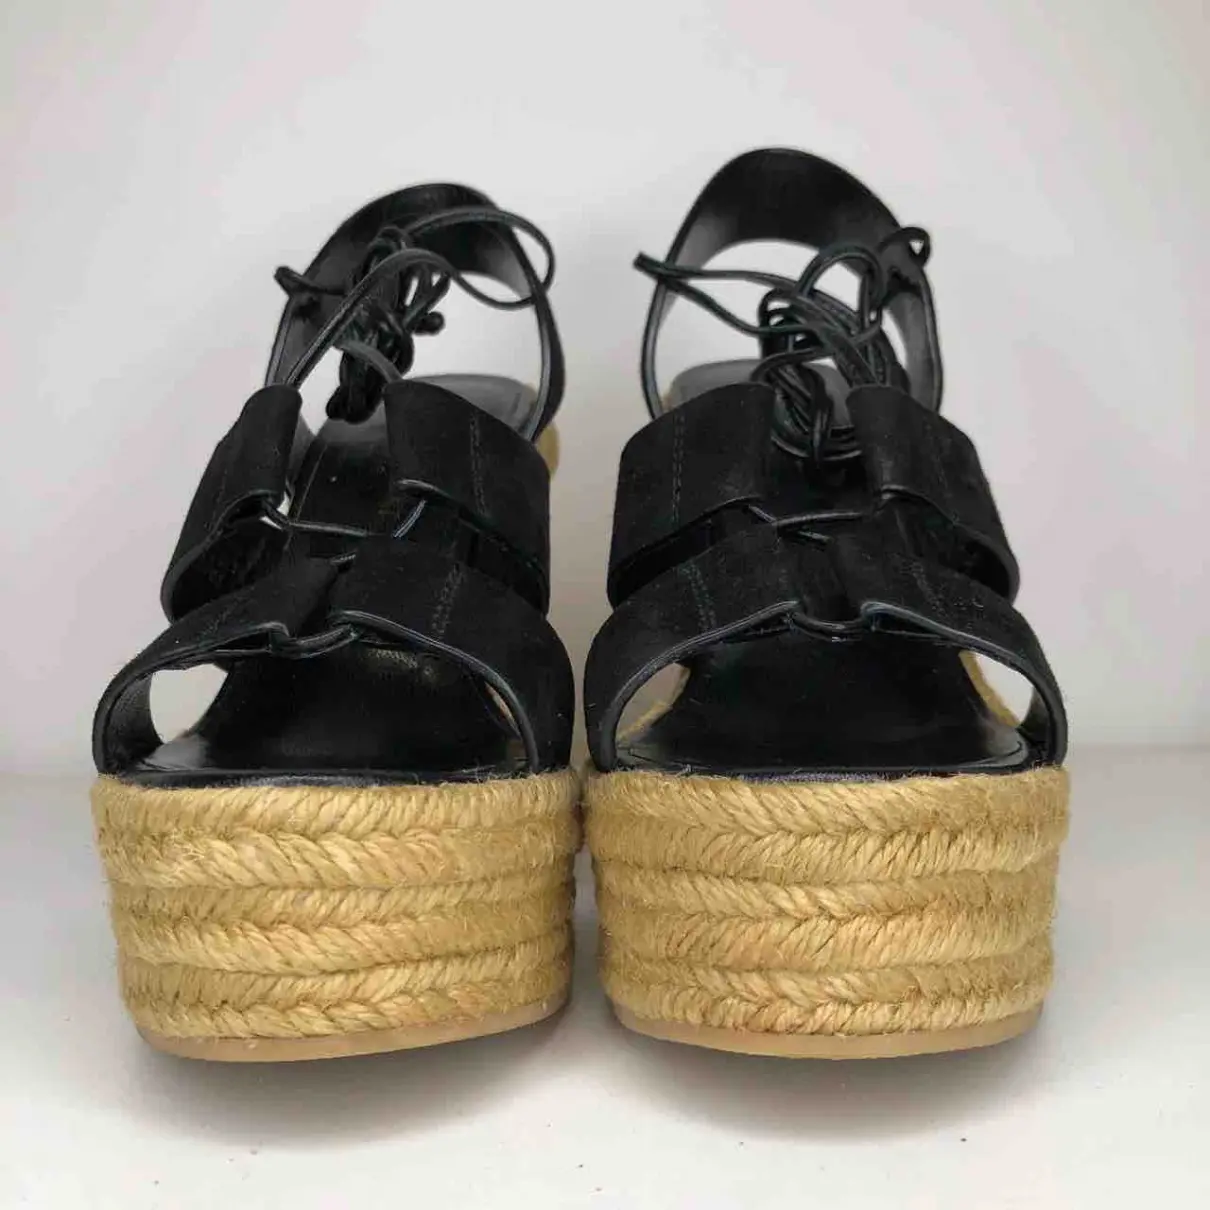 Buy Saint Laurent Sandals online